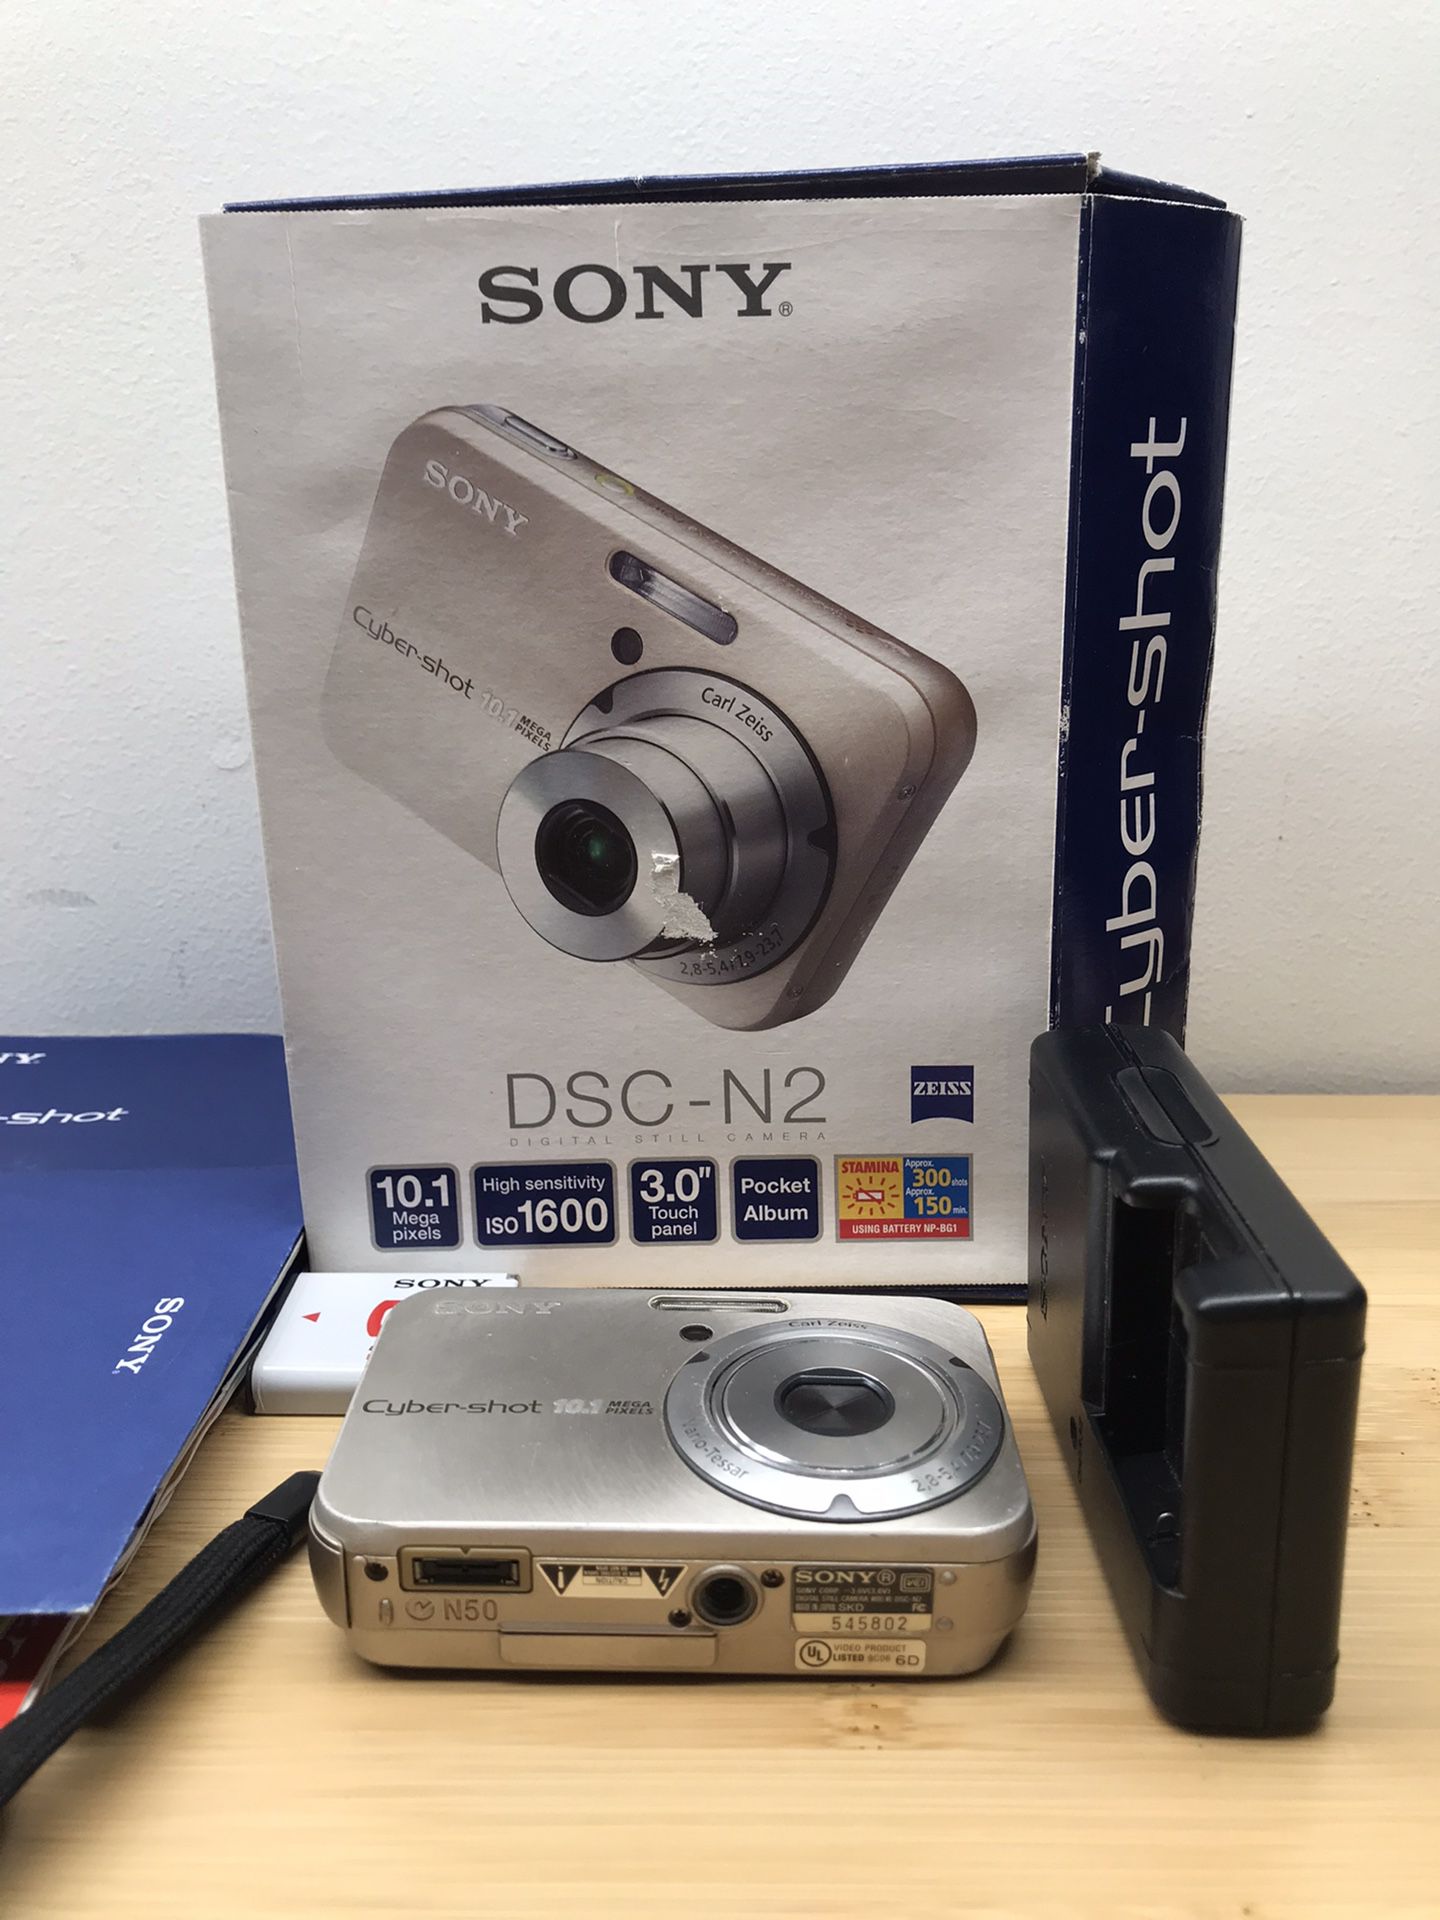 Sony Cyber-shot DSC-N2 10.1MP Digital Camera - Silver